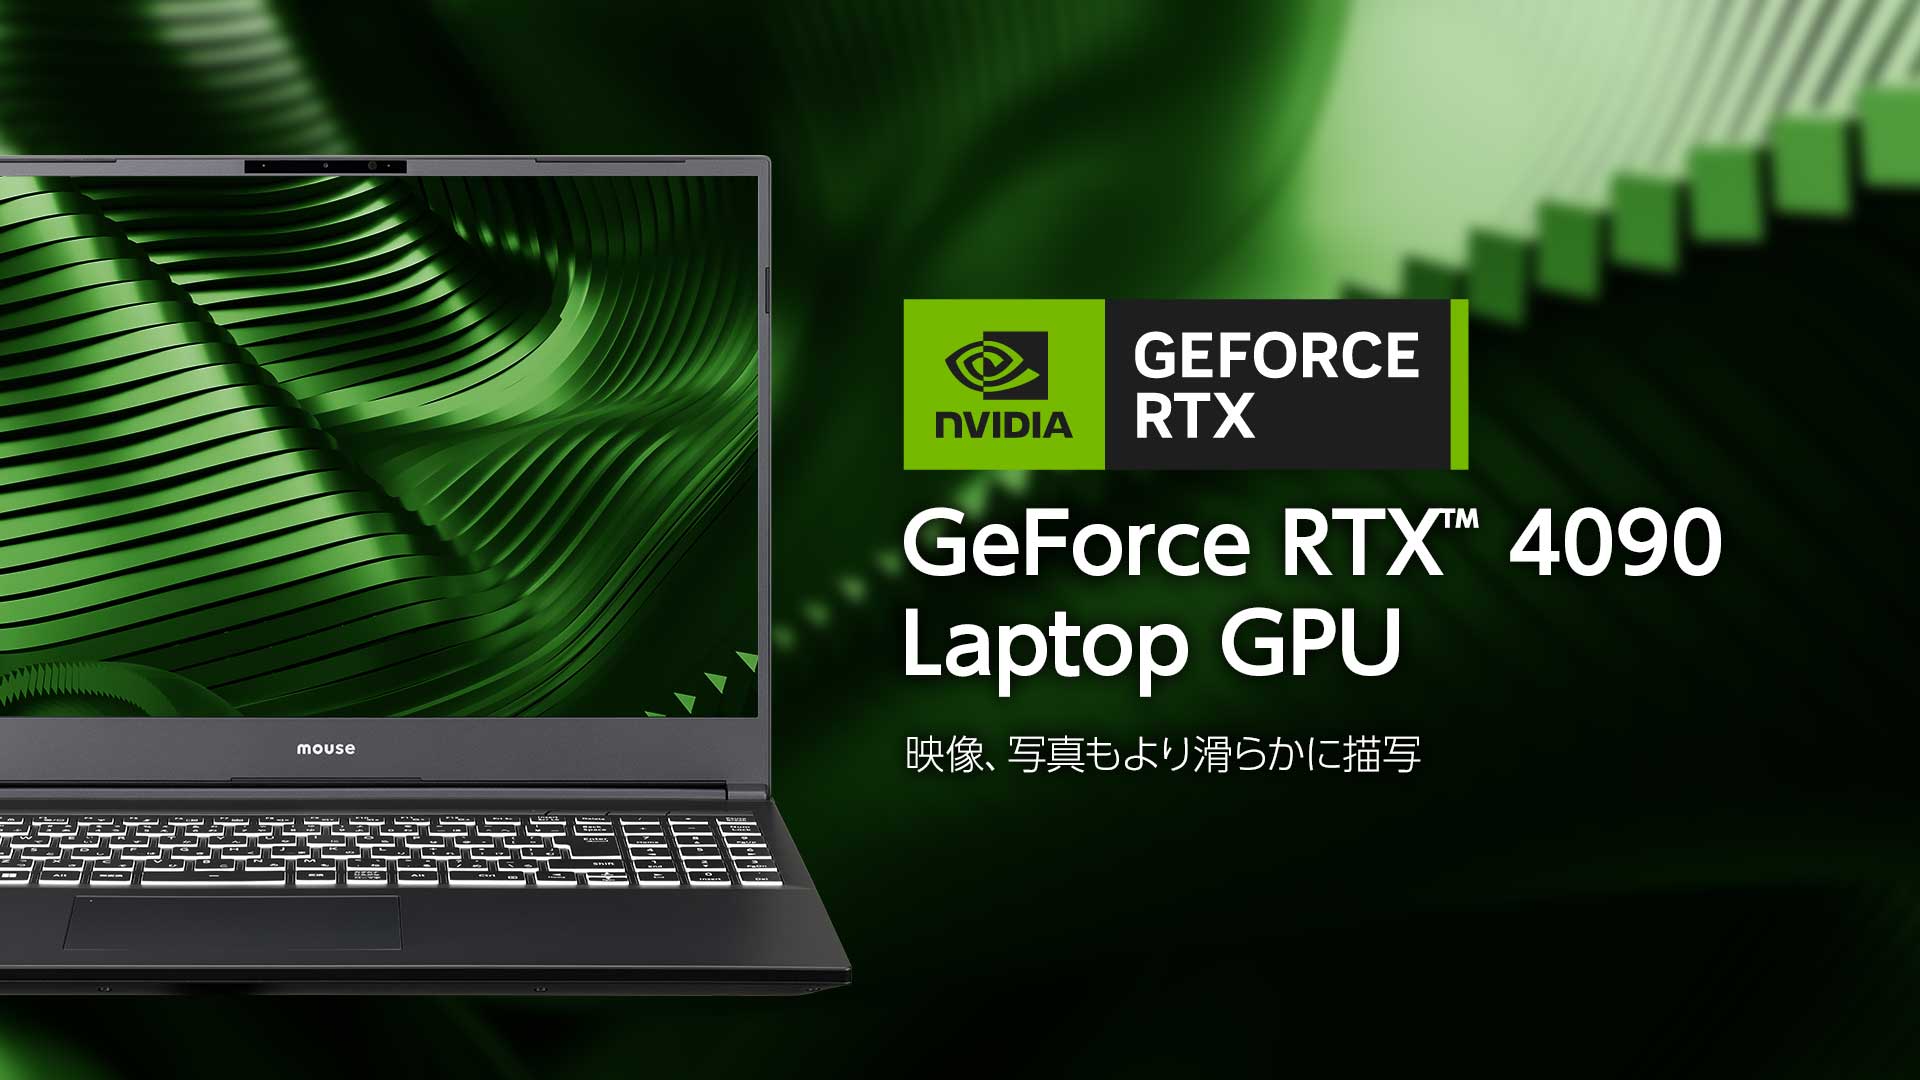 NVIDIA GeForce RTX 4090 Laptop GPU